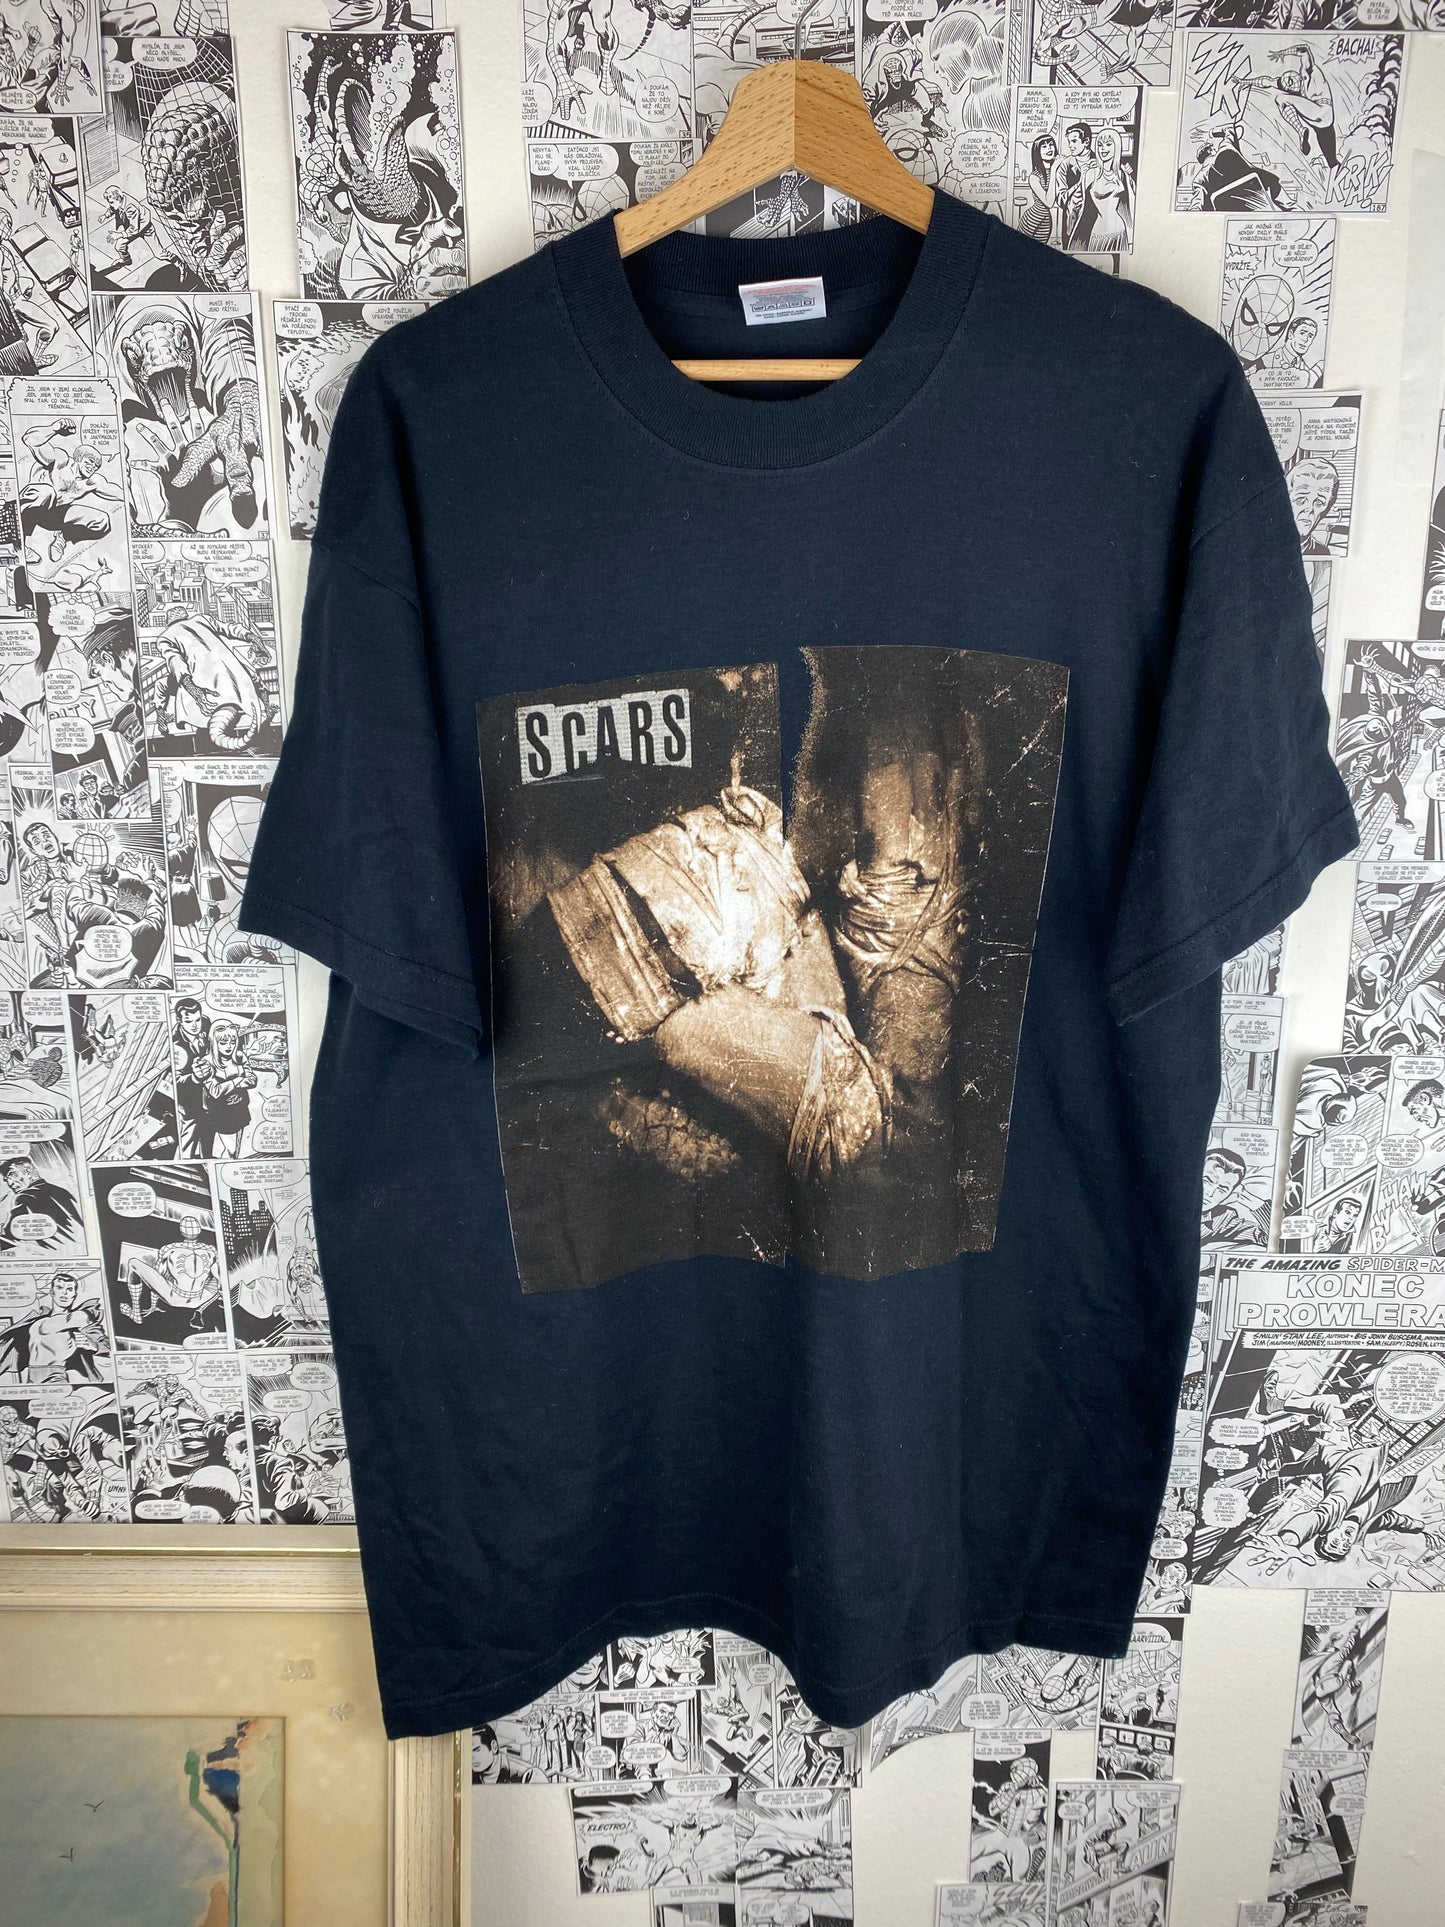 Vintage Gary Moore “Scars” 2002 tour t-shirt - size L